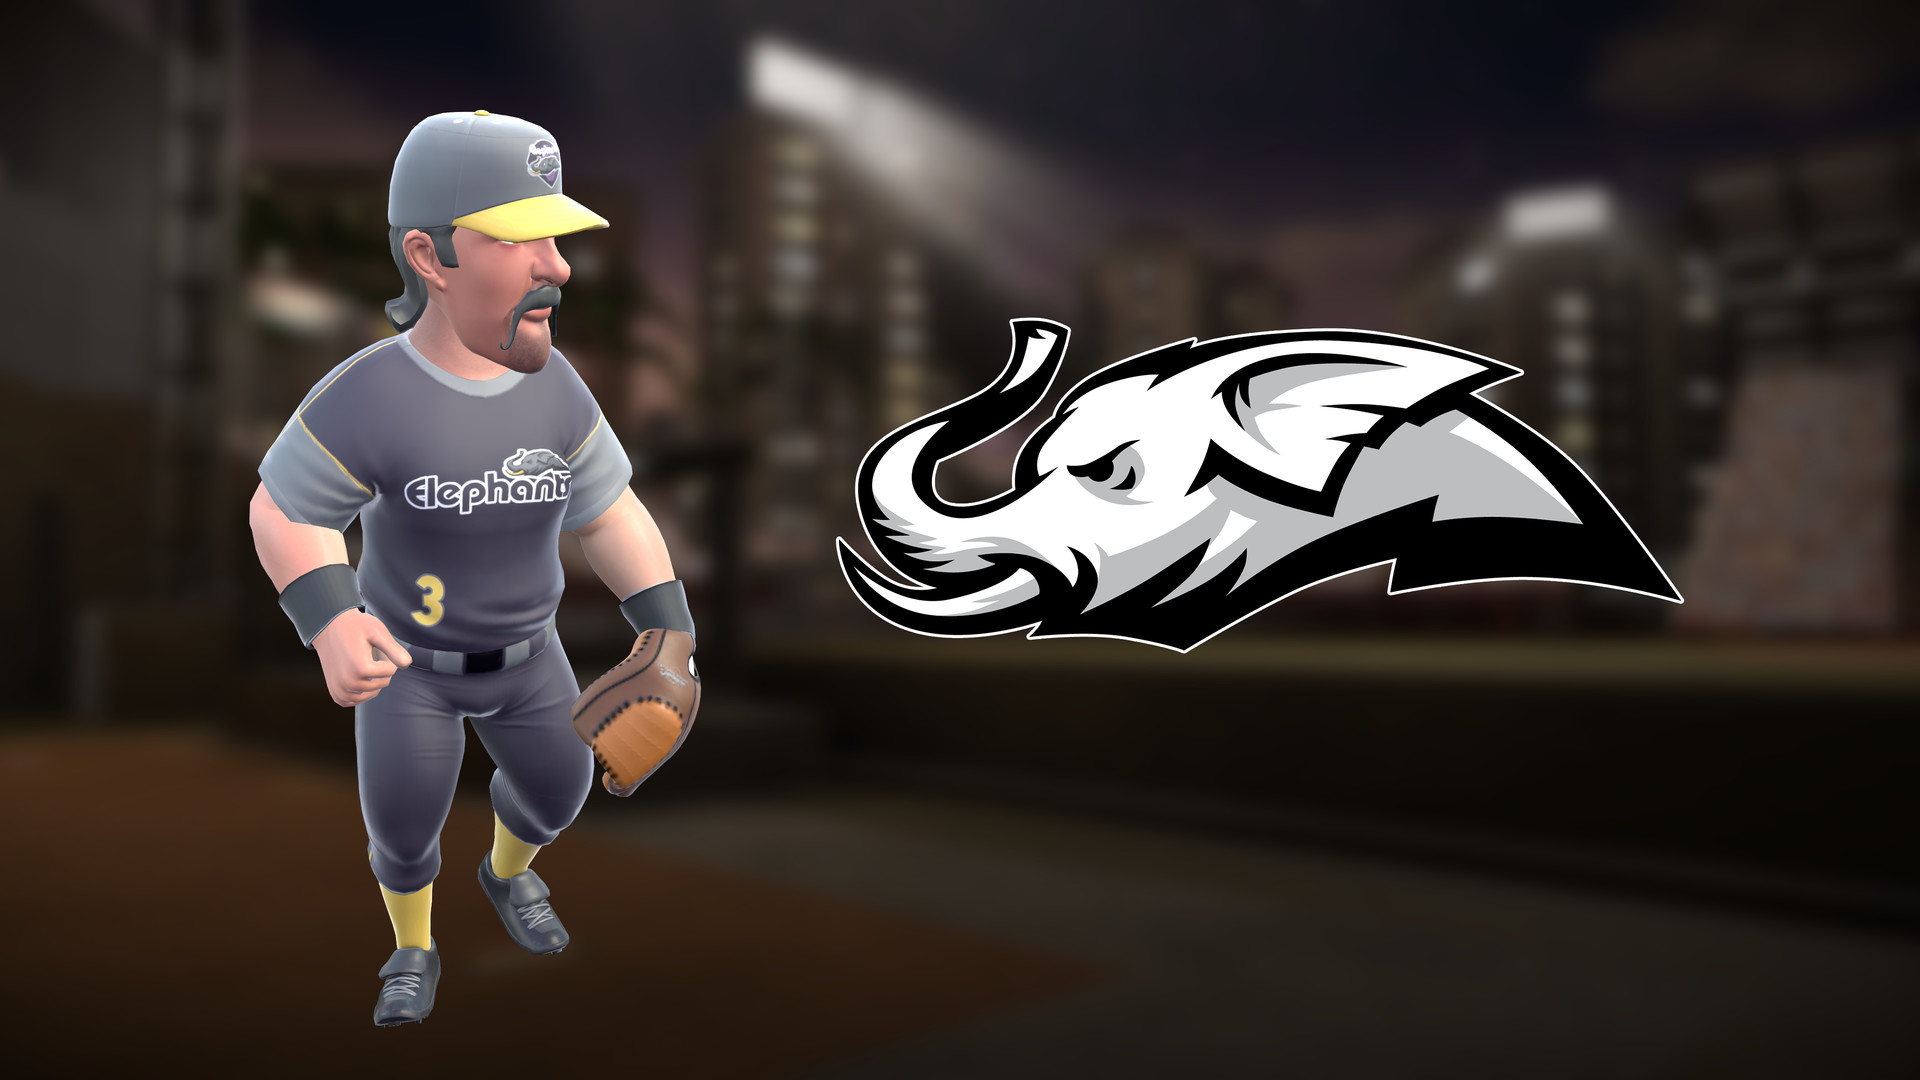 Super Mega Baseball 2 - Wild Team Customization Pack on Steam